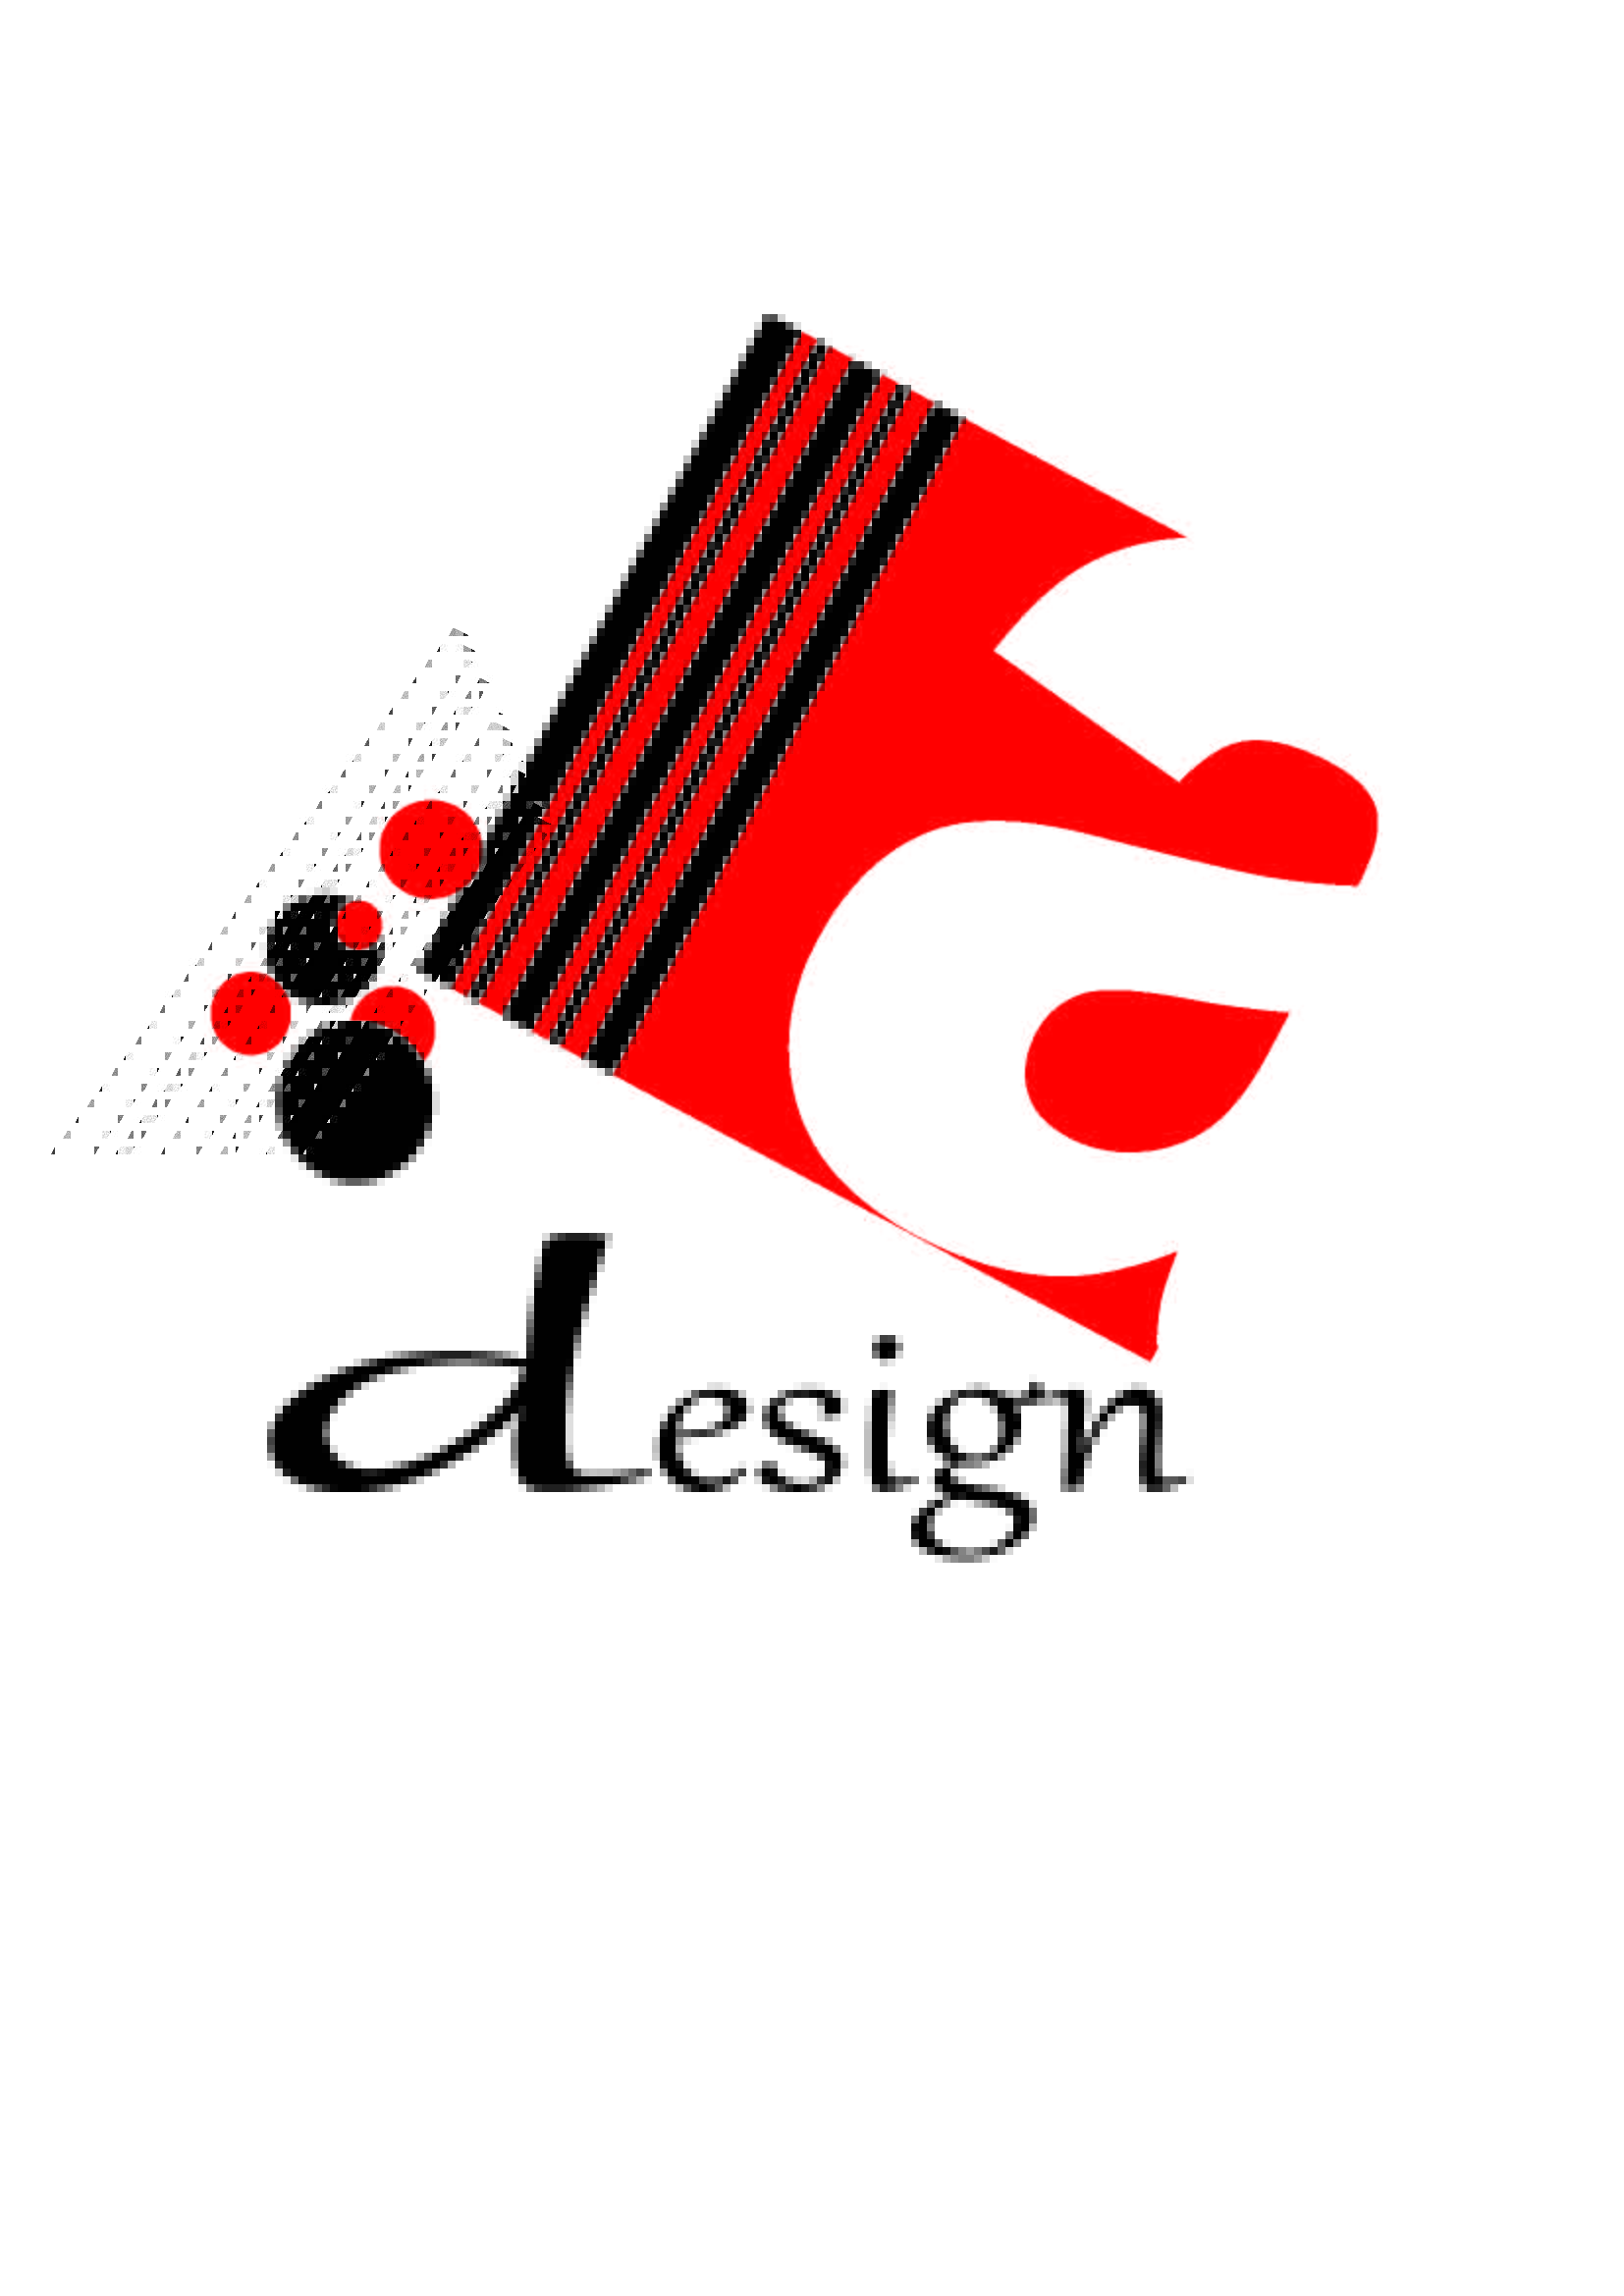 Graphic Company Logo - Company Logos Design Graphic Image Graphic Design, action